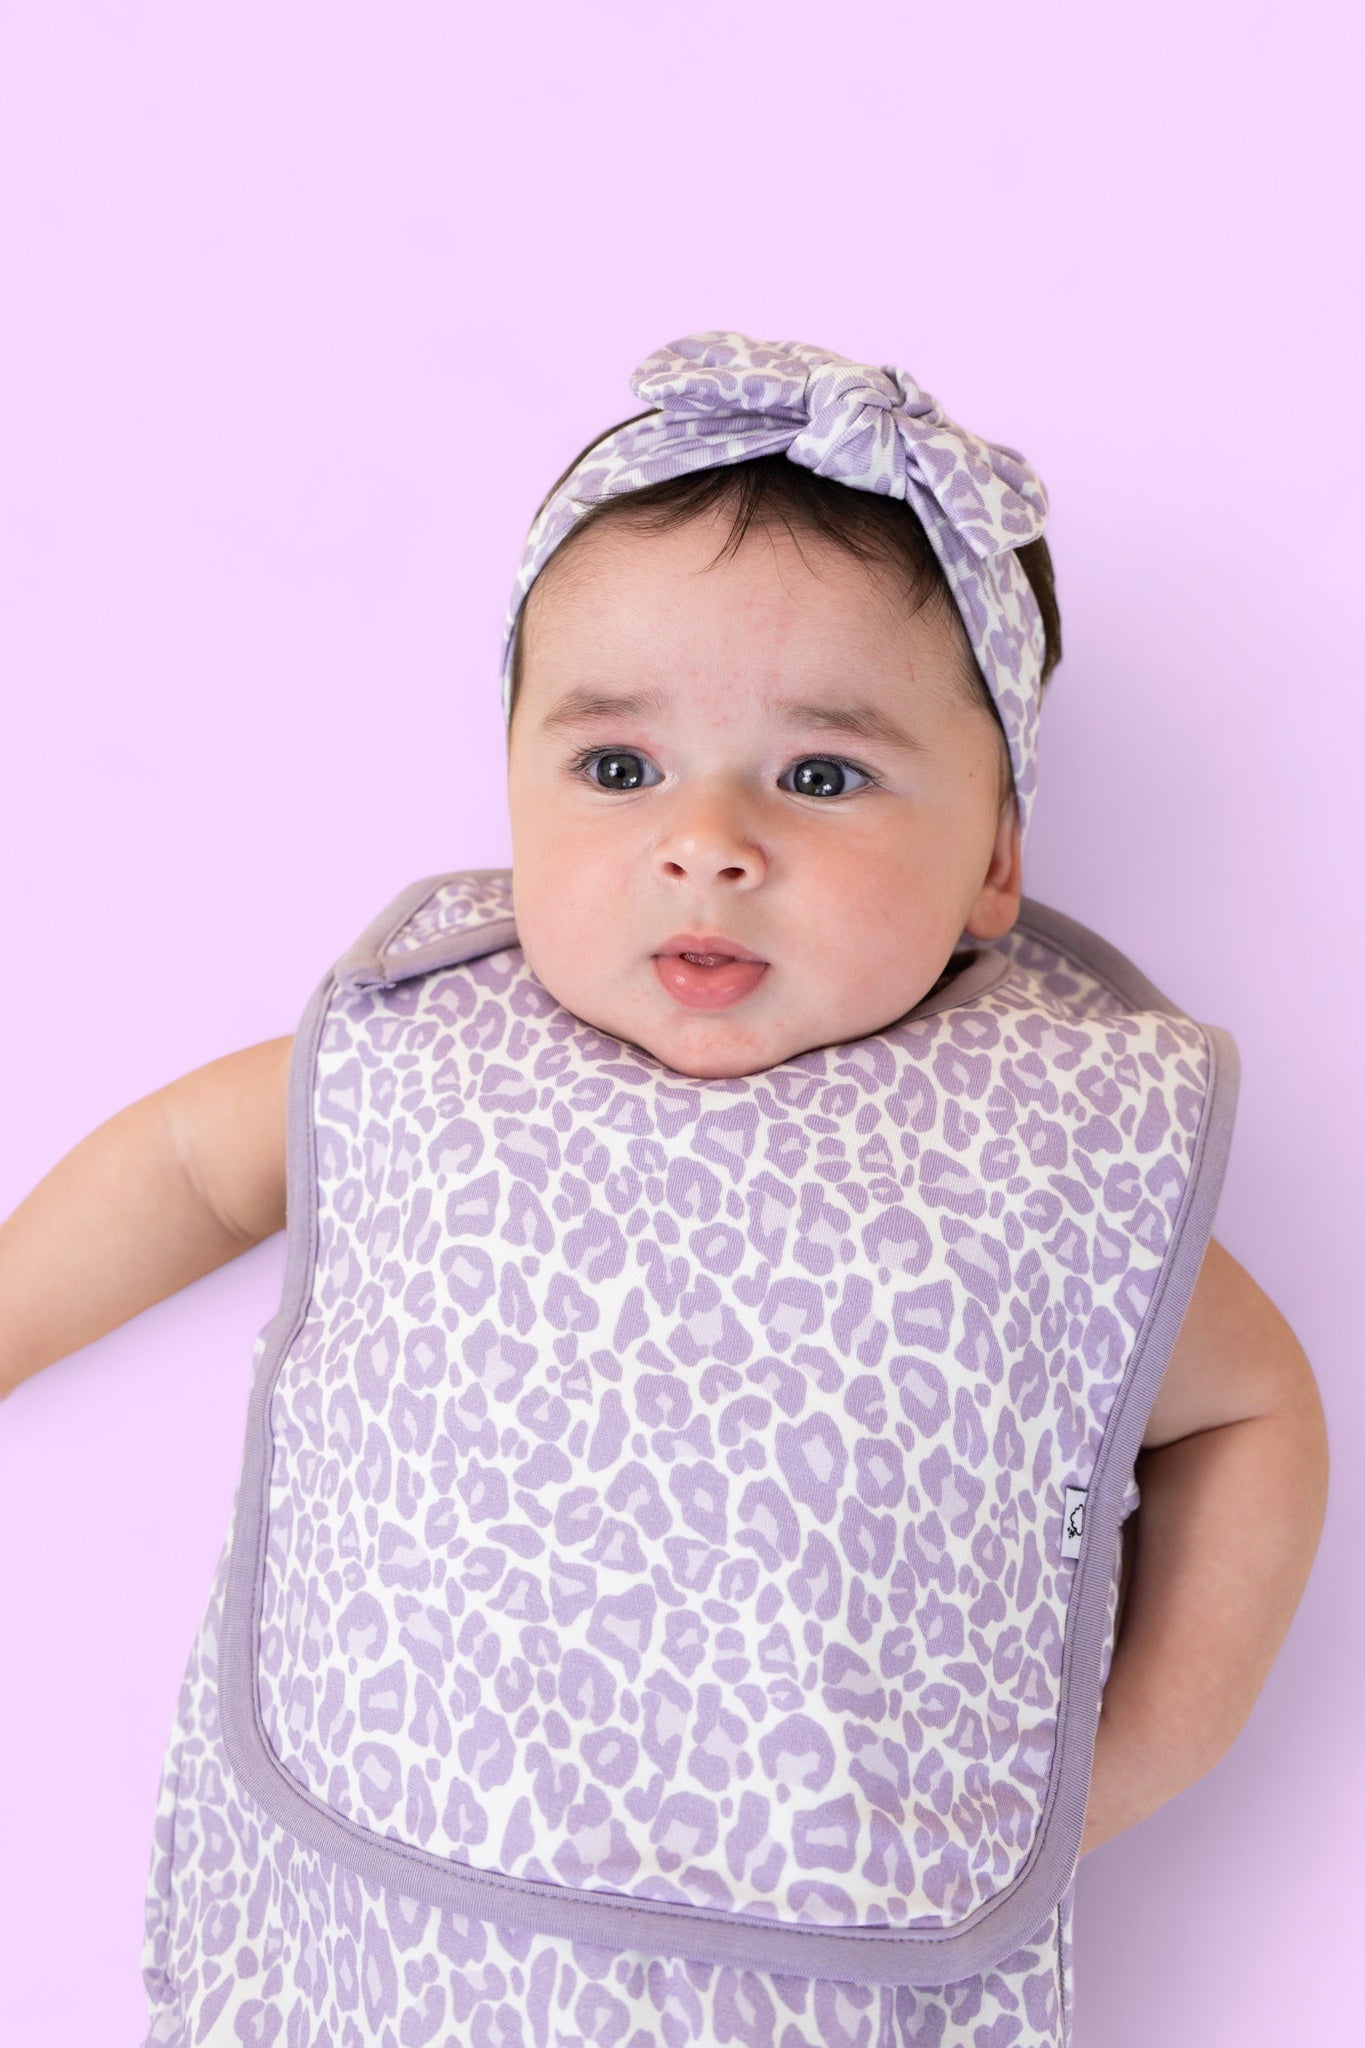 Lavender Leopard Dream Baby Bib